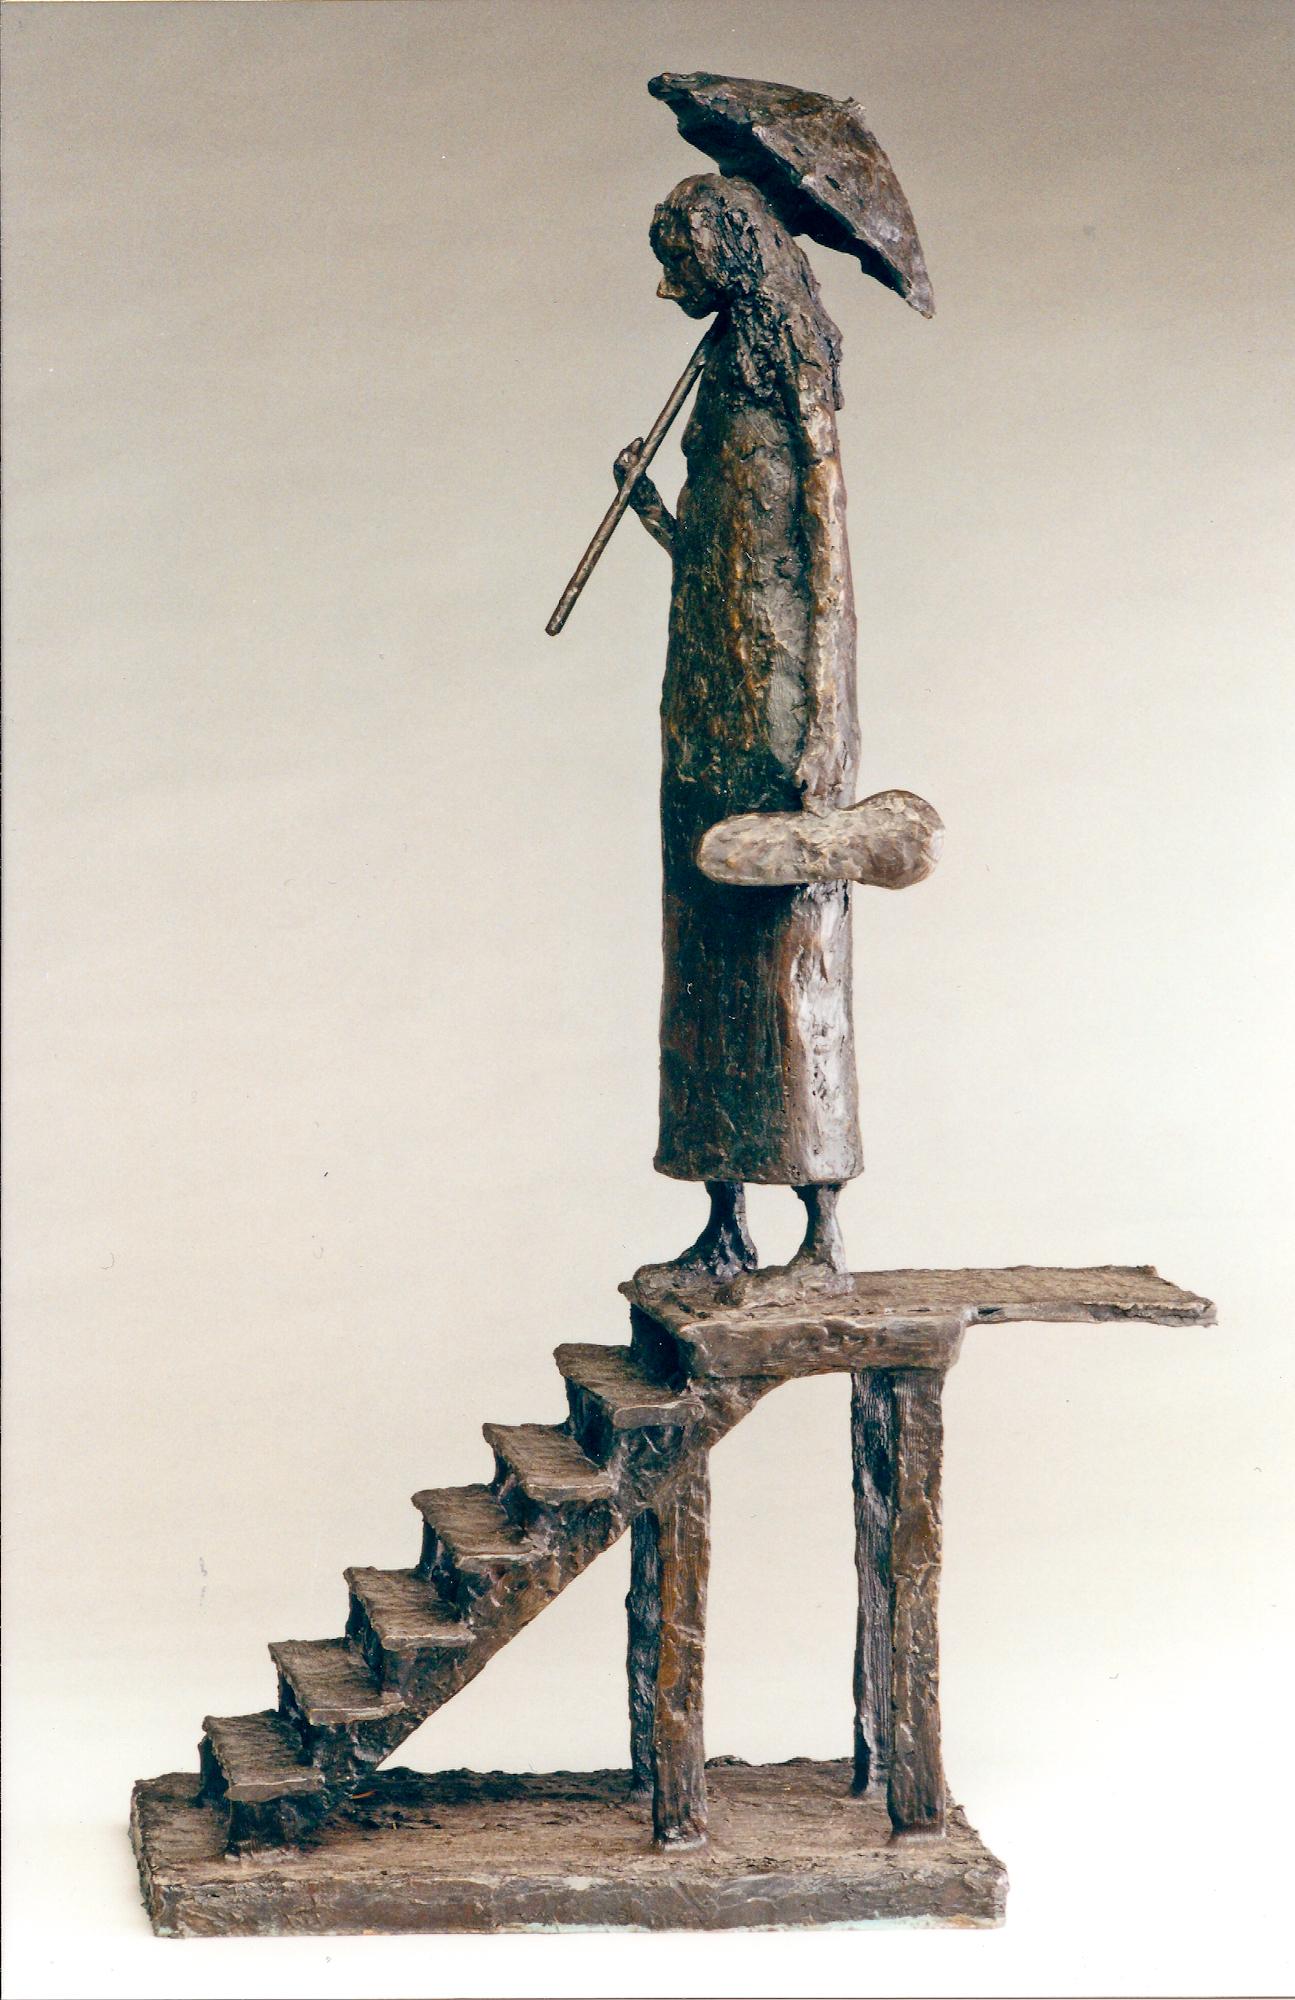 Stairway of Illusions, by Eduardo Oropeza, bronze sculpture, woman, violin
Stairway of Illusions by Eduardo Oropeza bronze sculpture, a woman on stairs viola

ESCALERA DE ILLUSIONES
(Stairway of Illusions)
Bronze, Ed. of 25
29.5